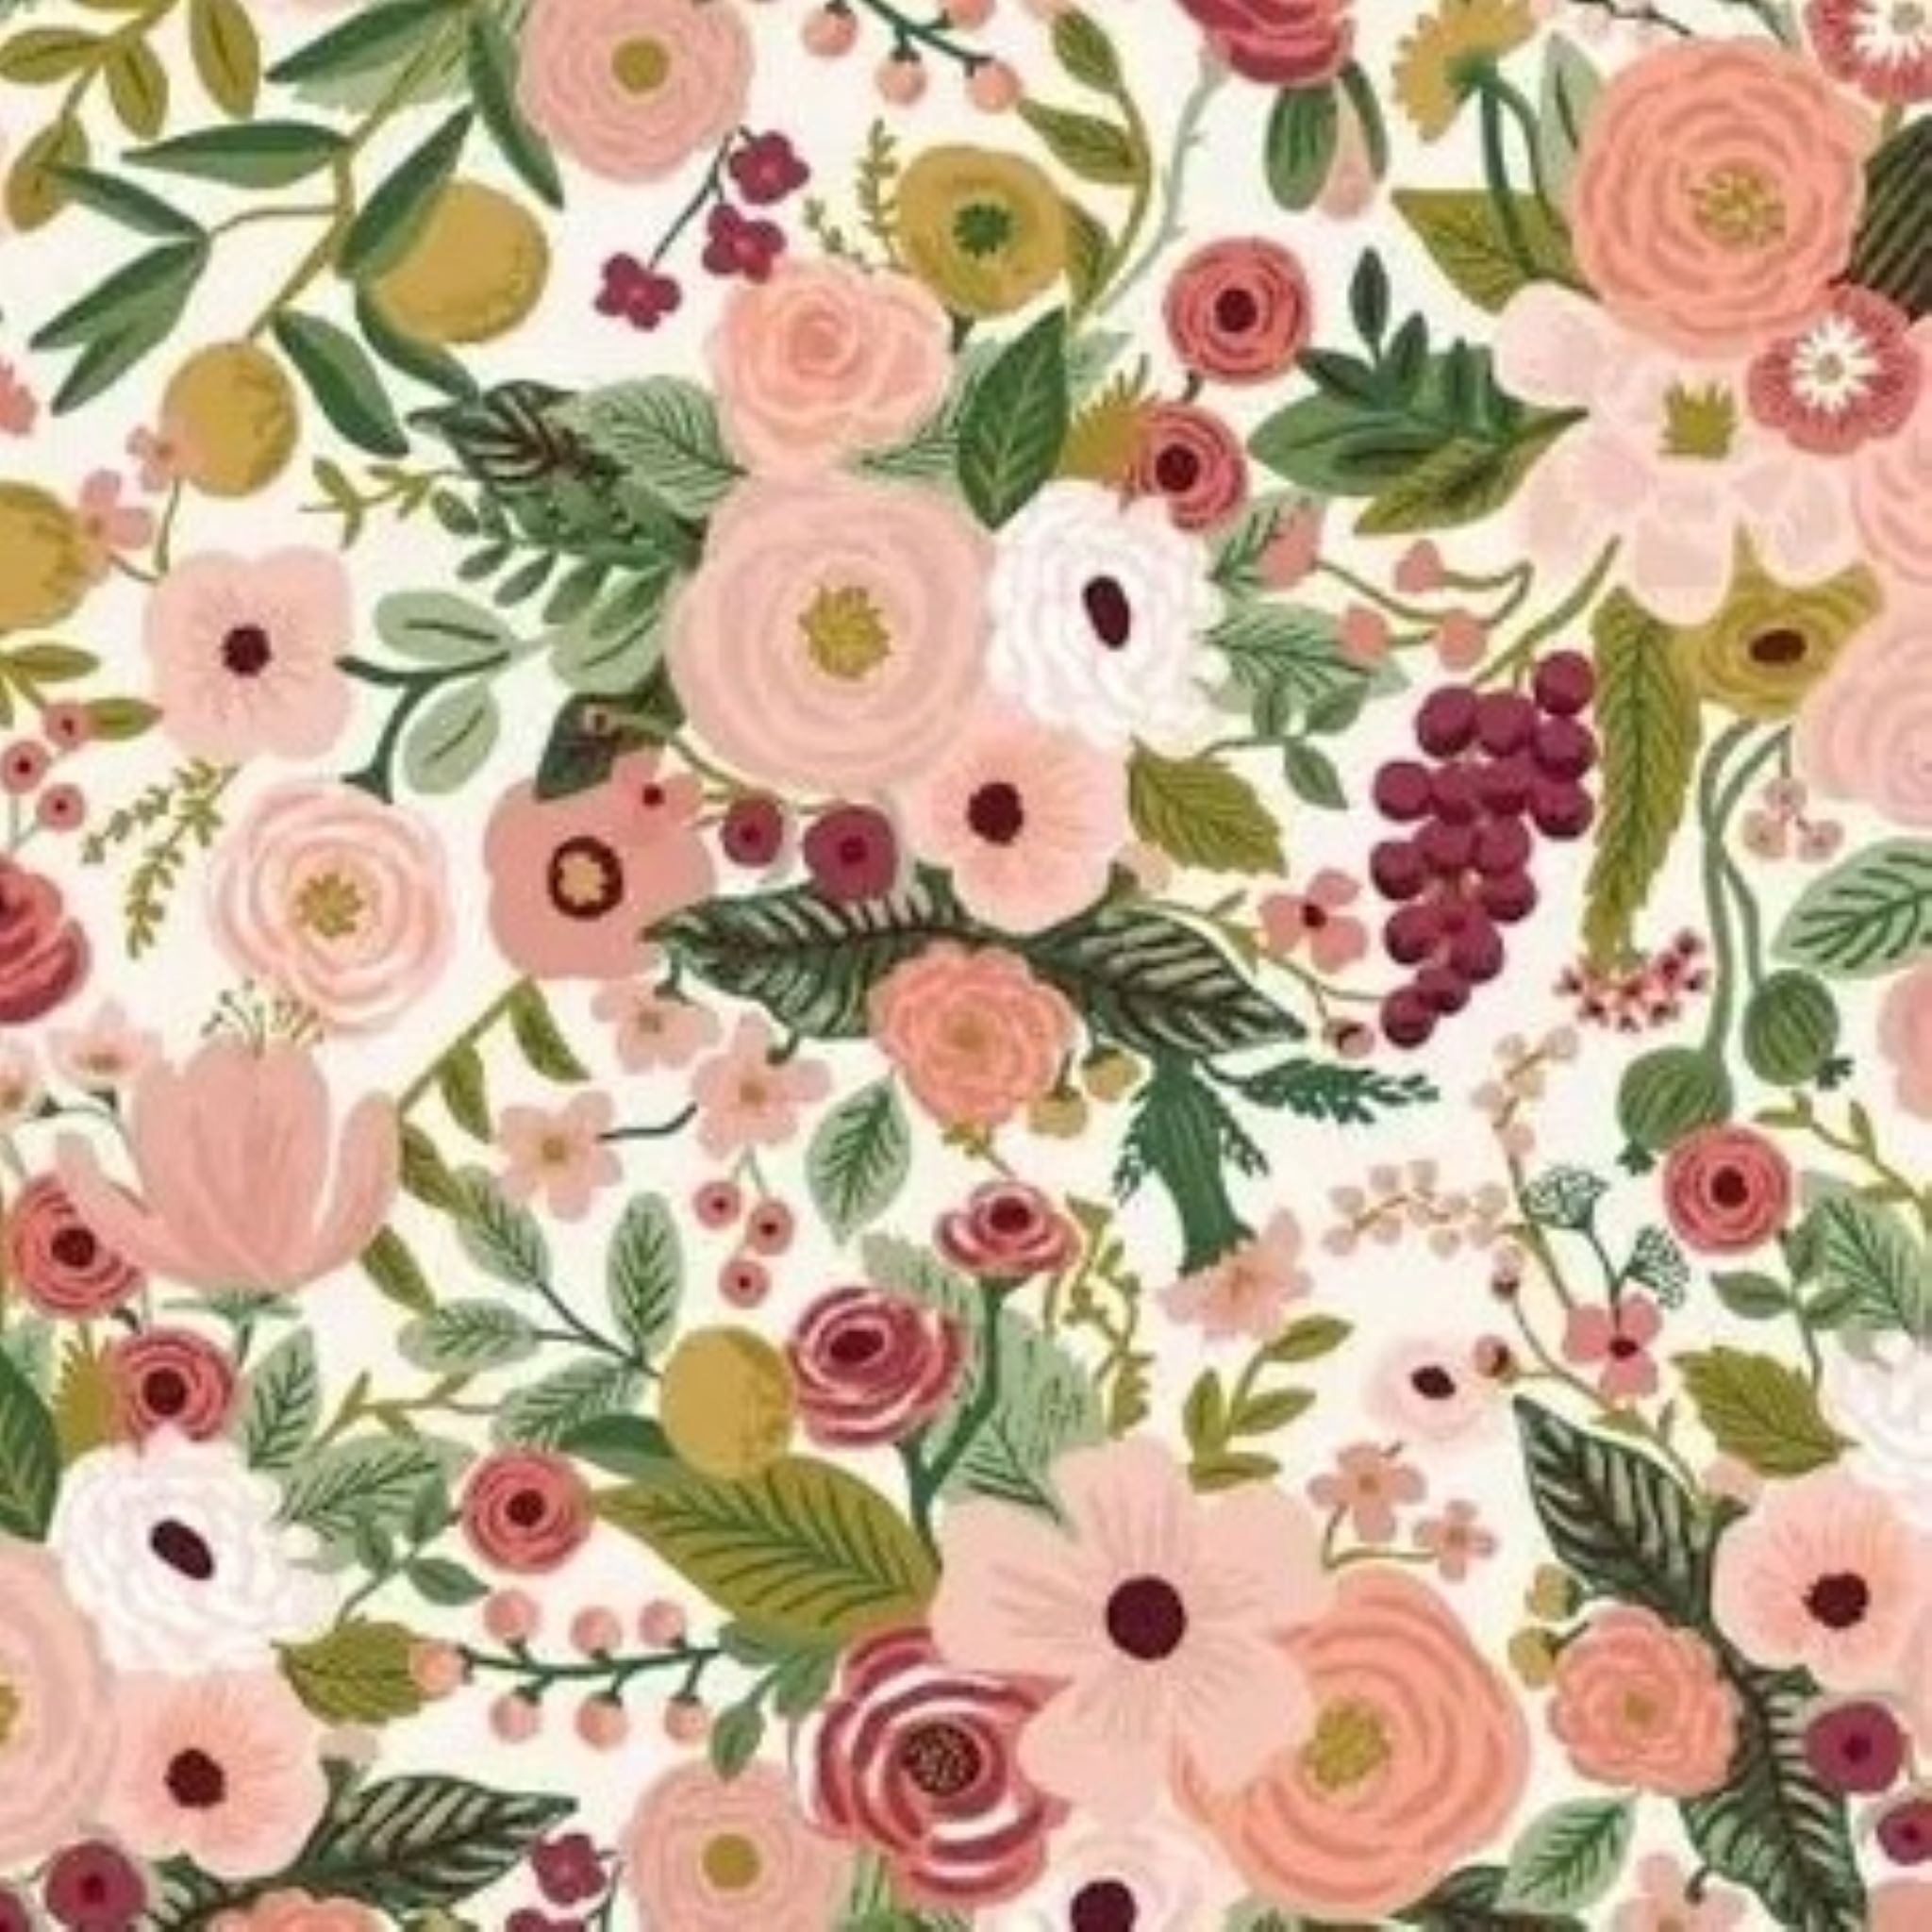 Garden Party Rose Fabric - MookyPookyandMuffin